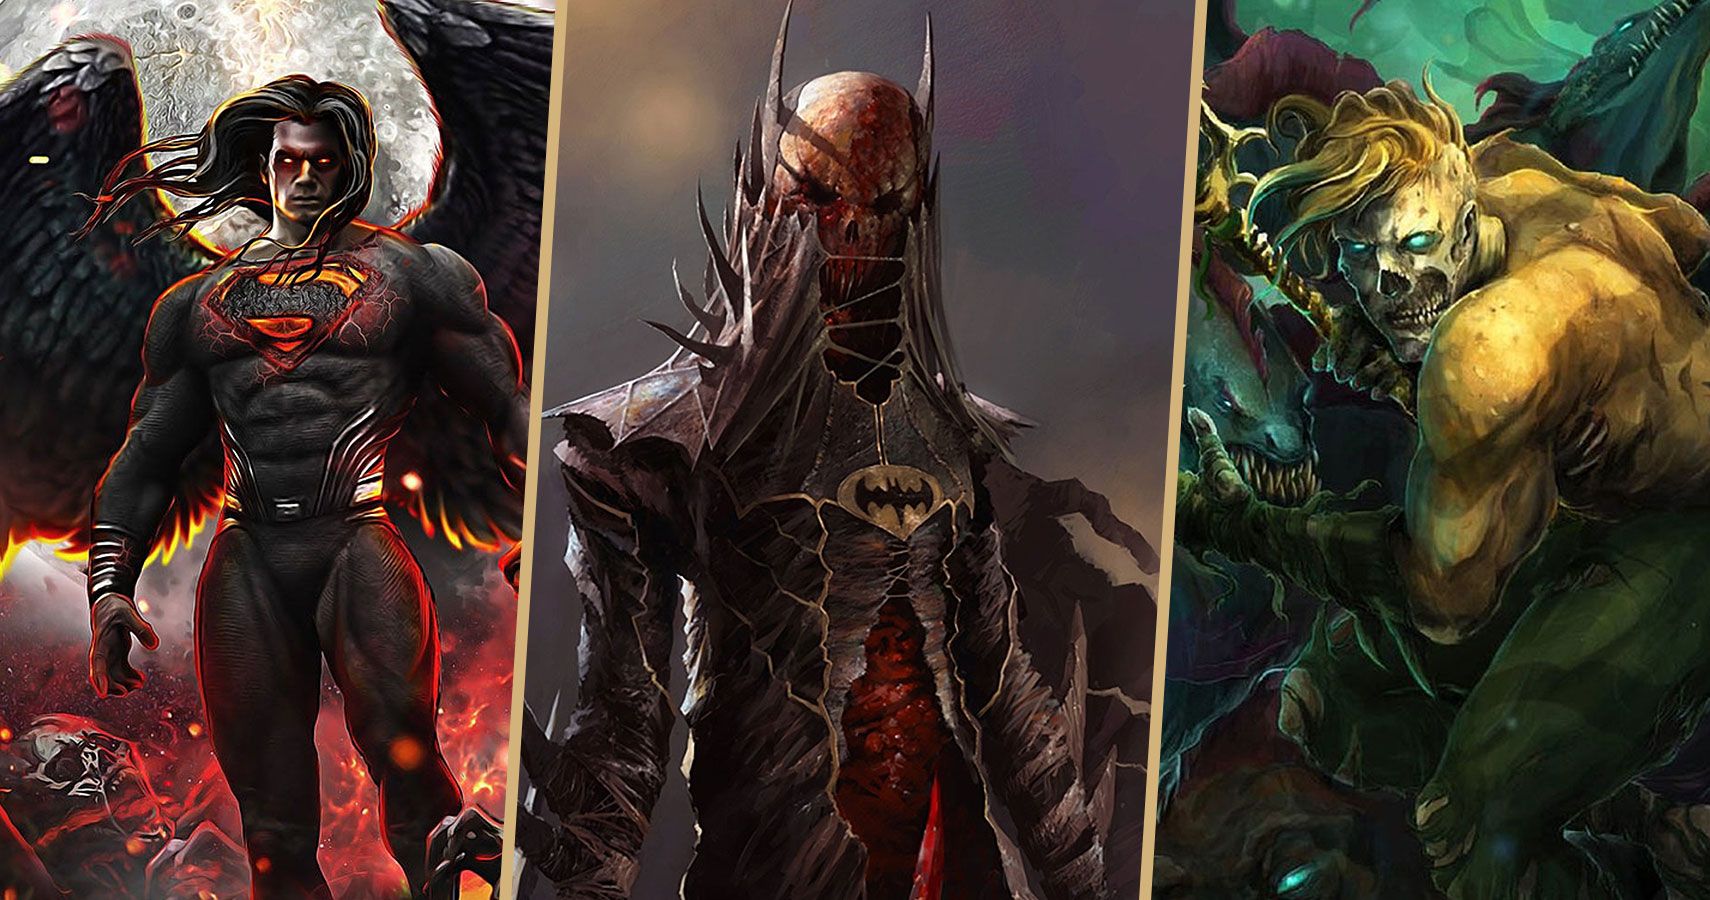 Картинки про всех супер злодея в мутантов из мультика. А 4 супер злодеи